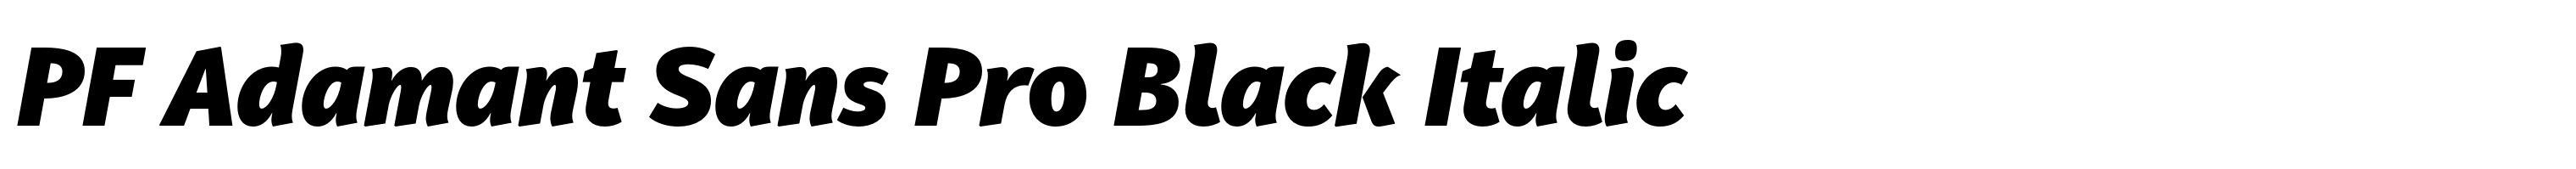 PF Adamant Sans Pro Black Italic